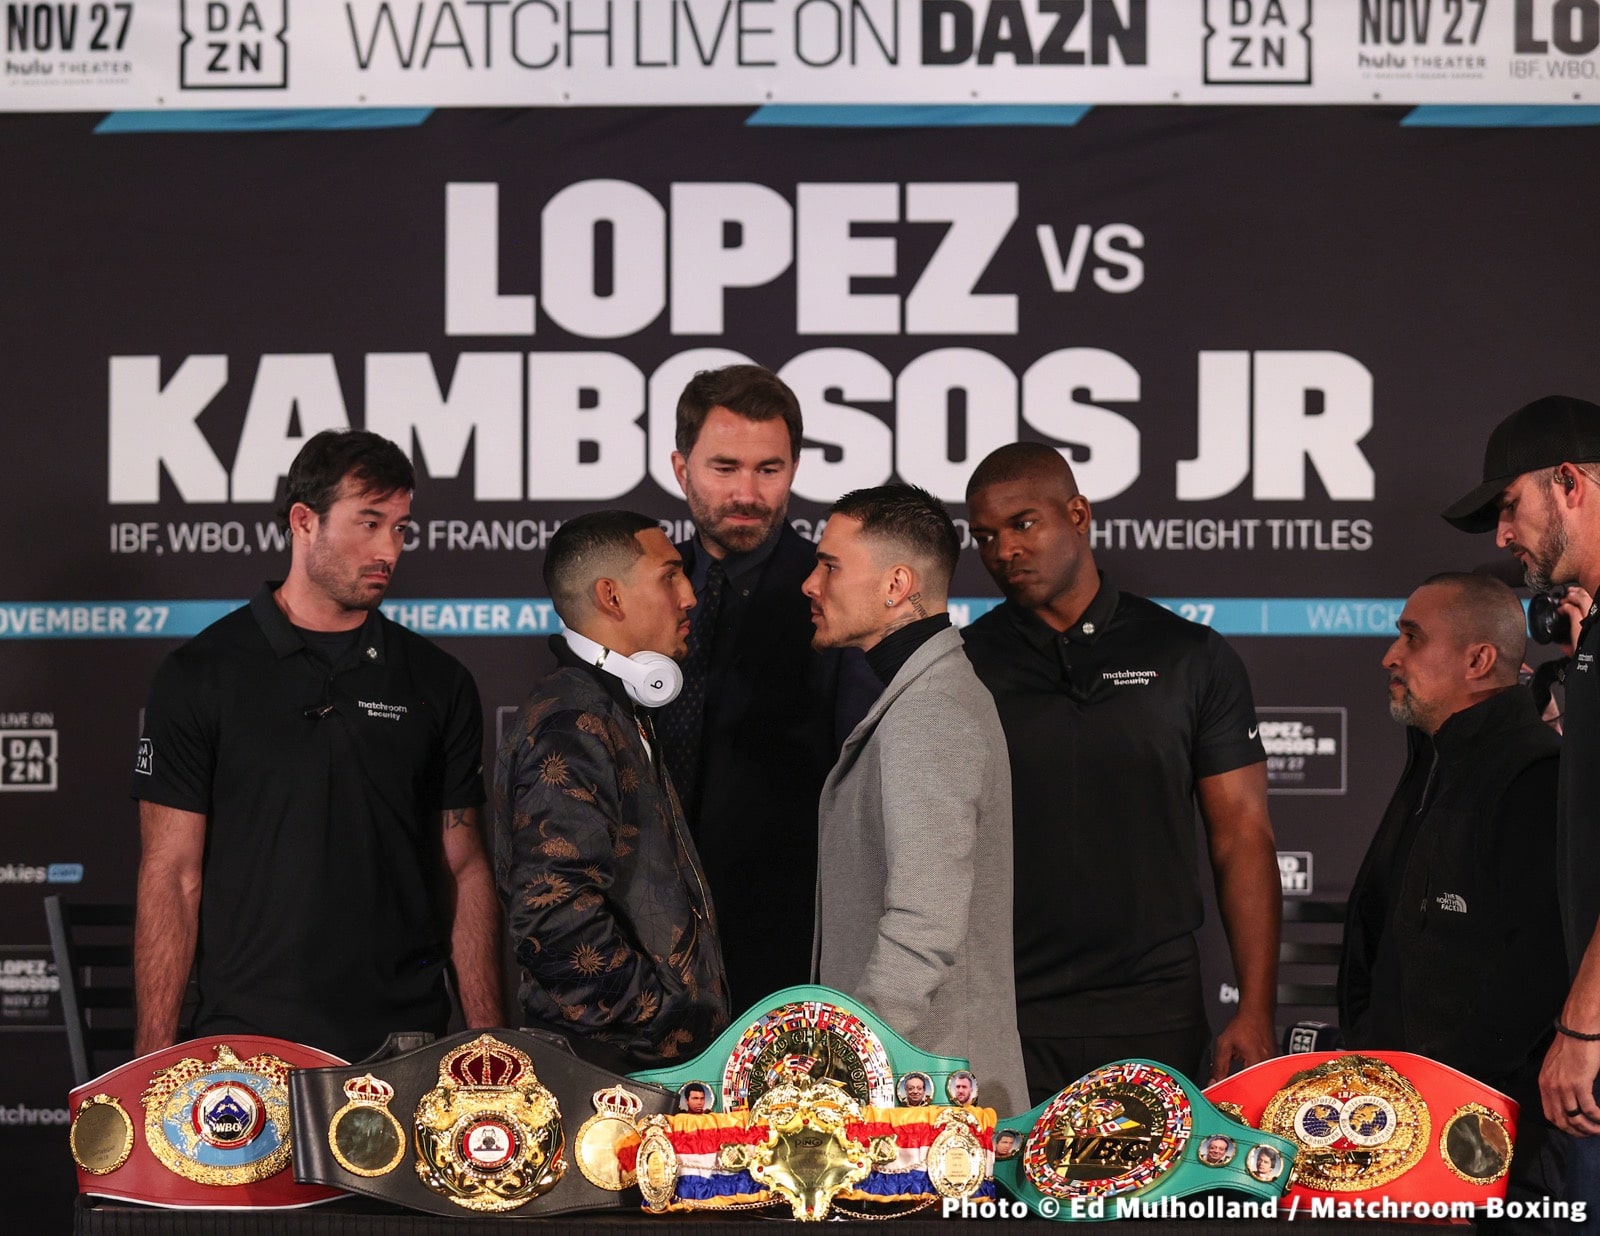 Image: Lopez Jr. vs. Kambosos Jr. - press quotes & photos